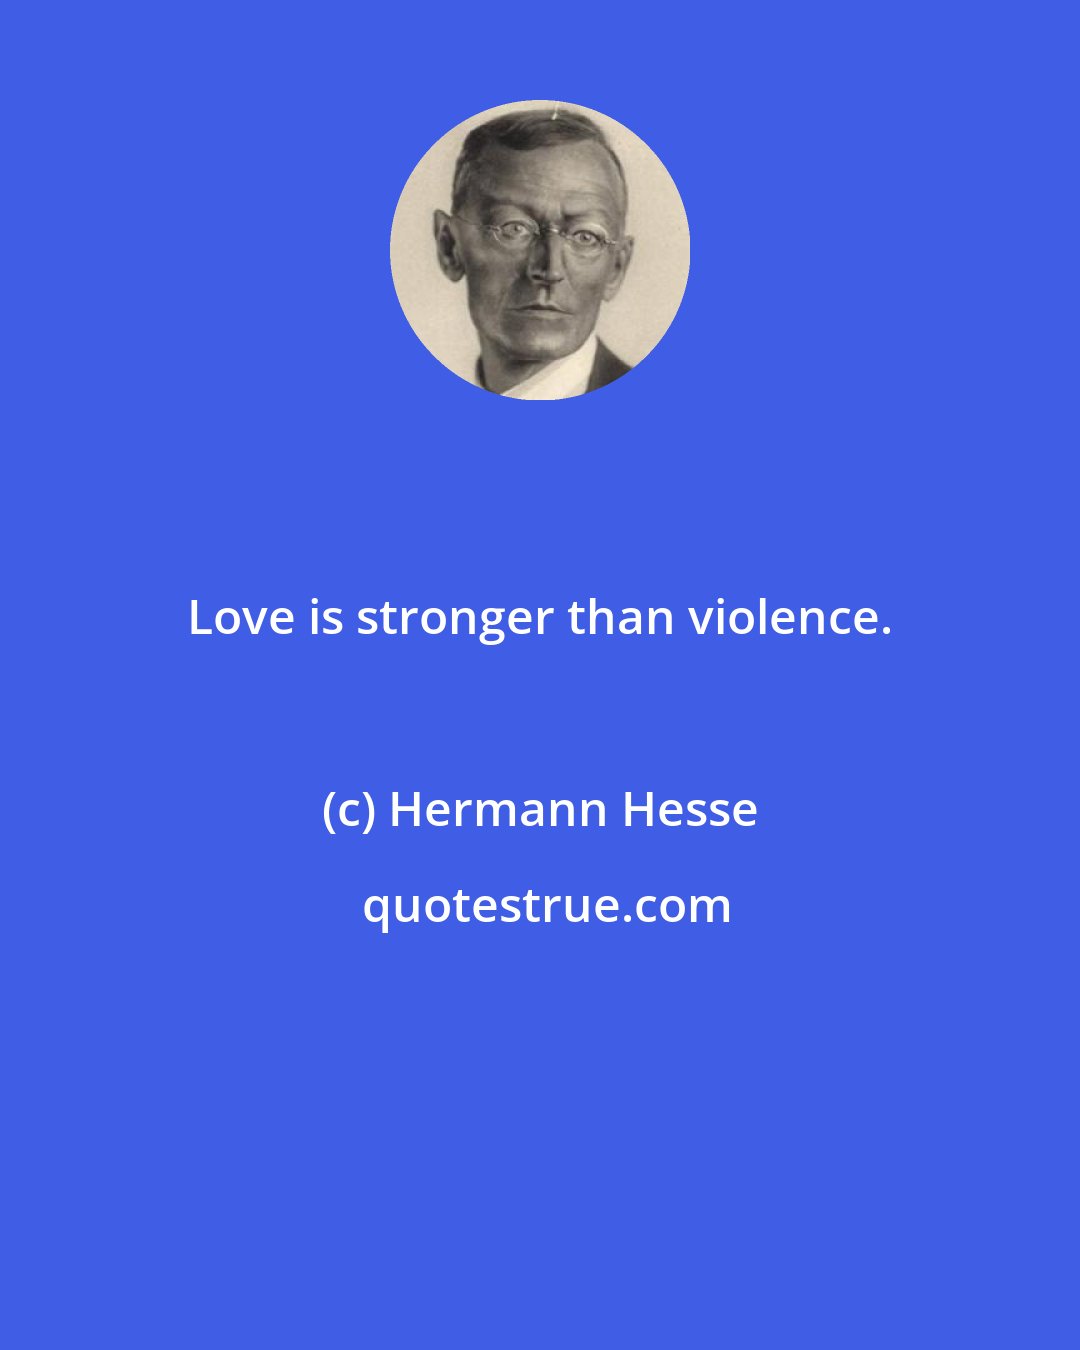 Hermann Hesse: Love is stronger than violence.